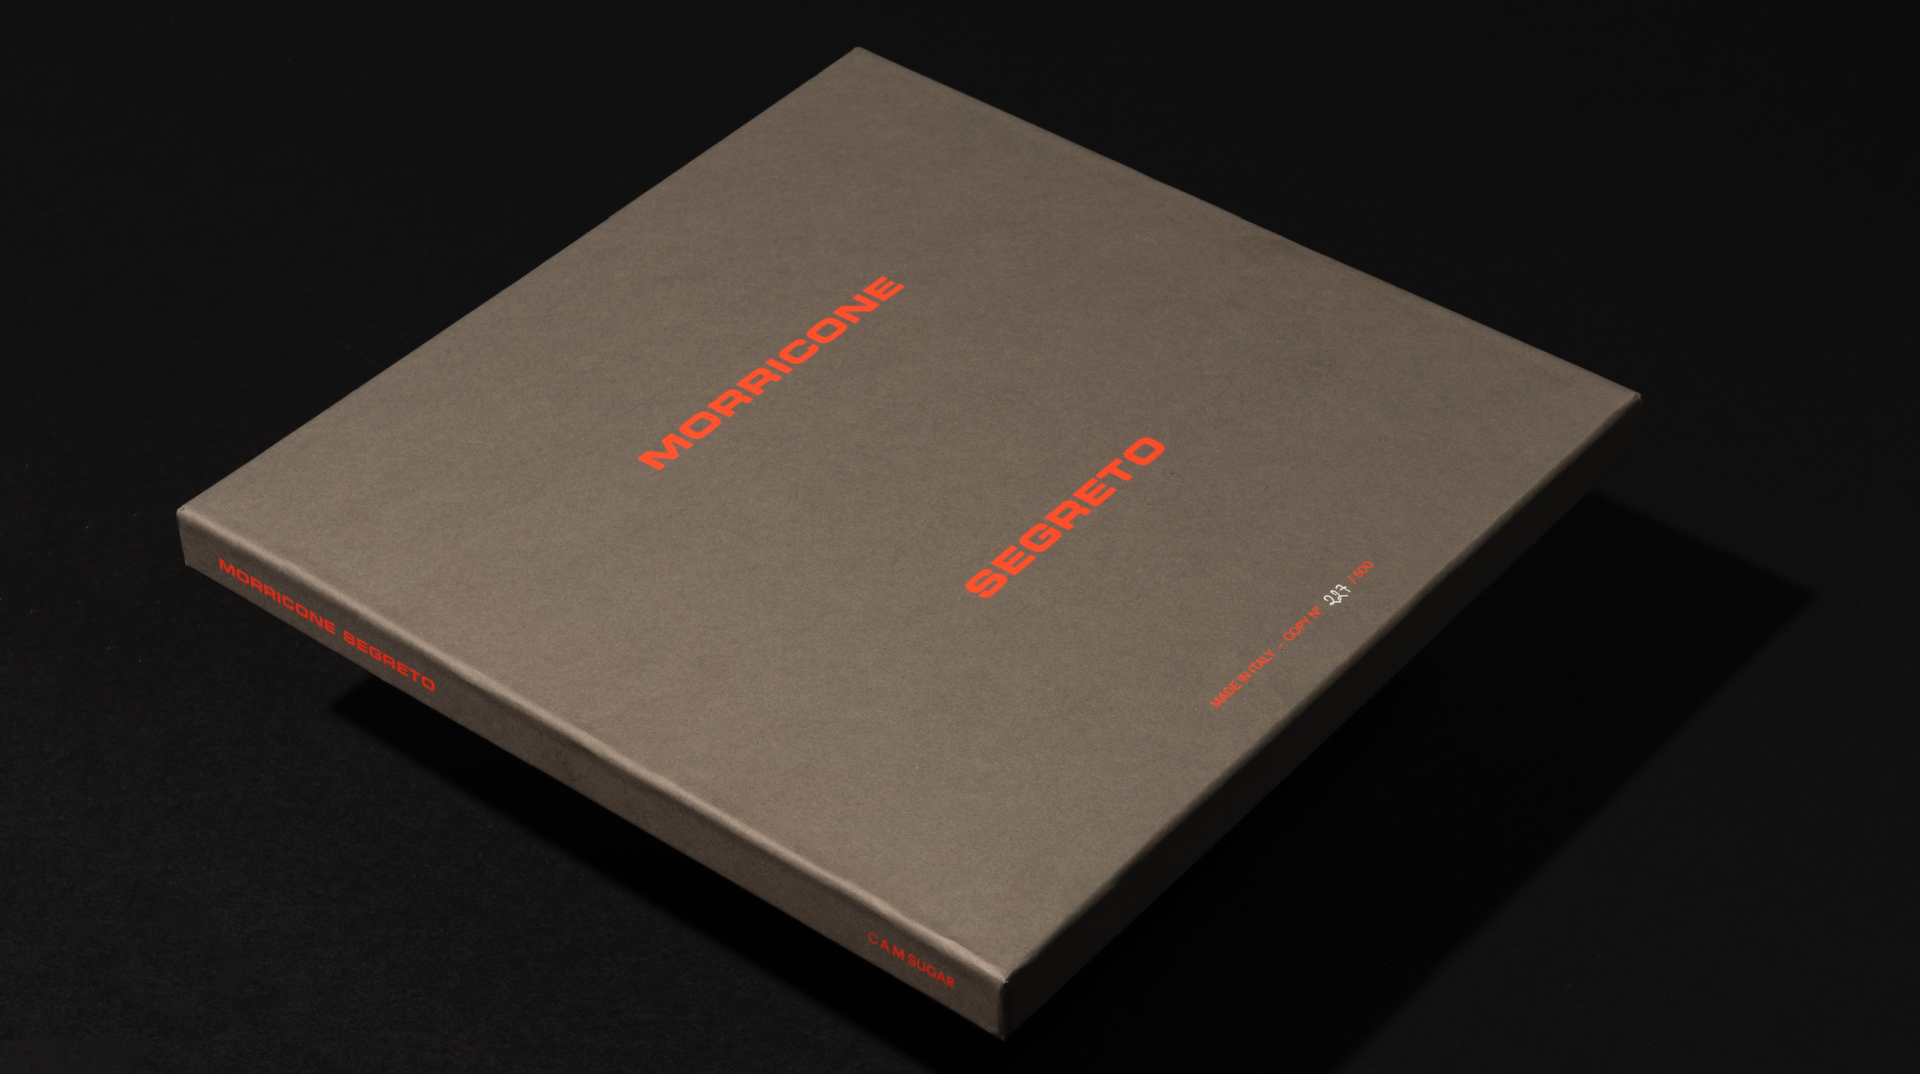 Morricone Segreto, Double LP, CD, Collectors Edition. Photography by Luciano Viti’s Archive